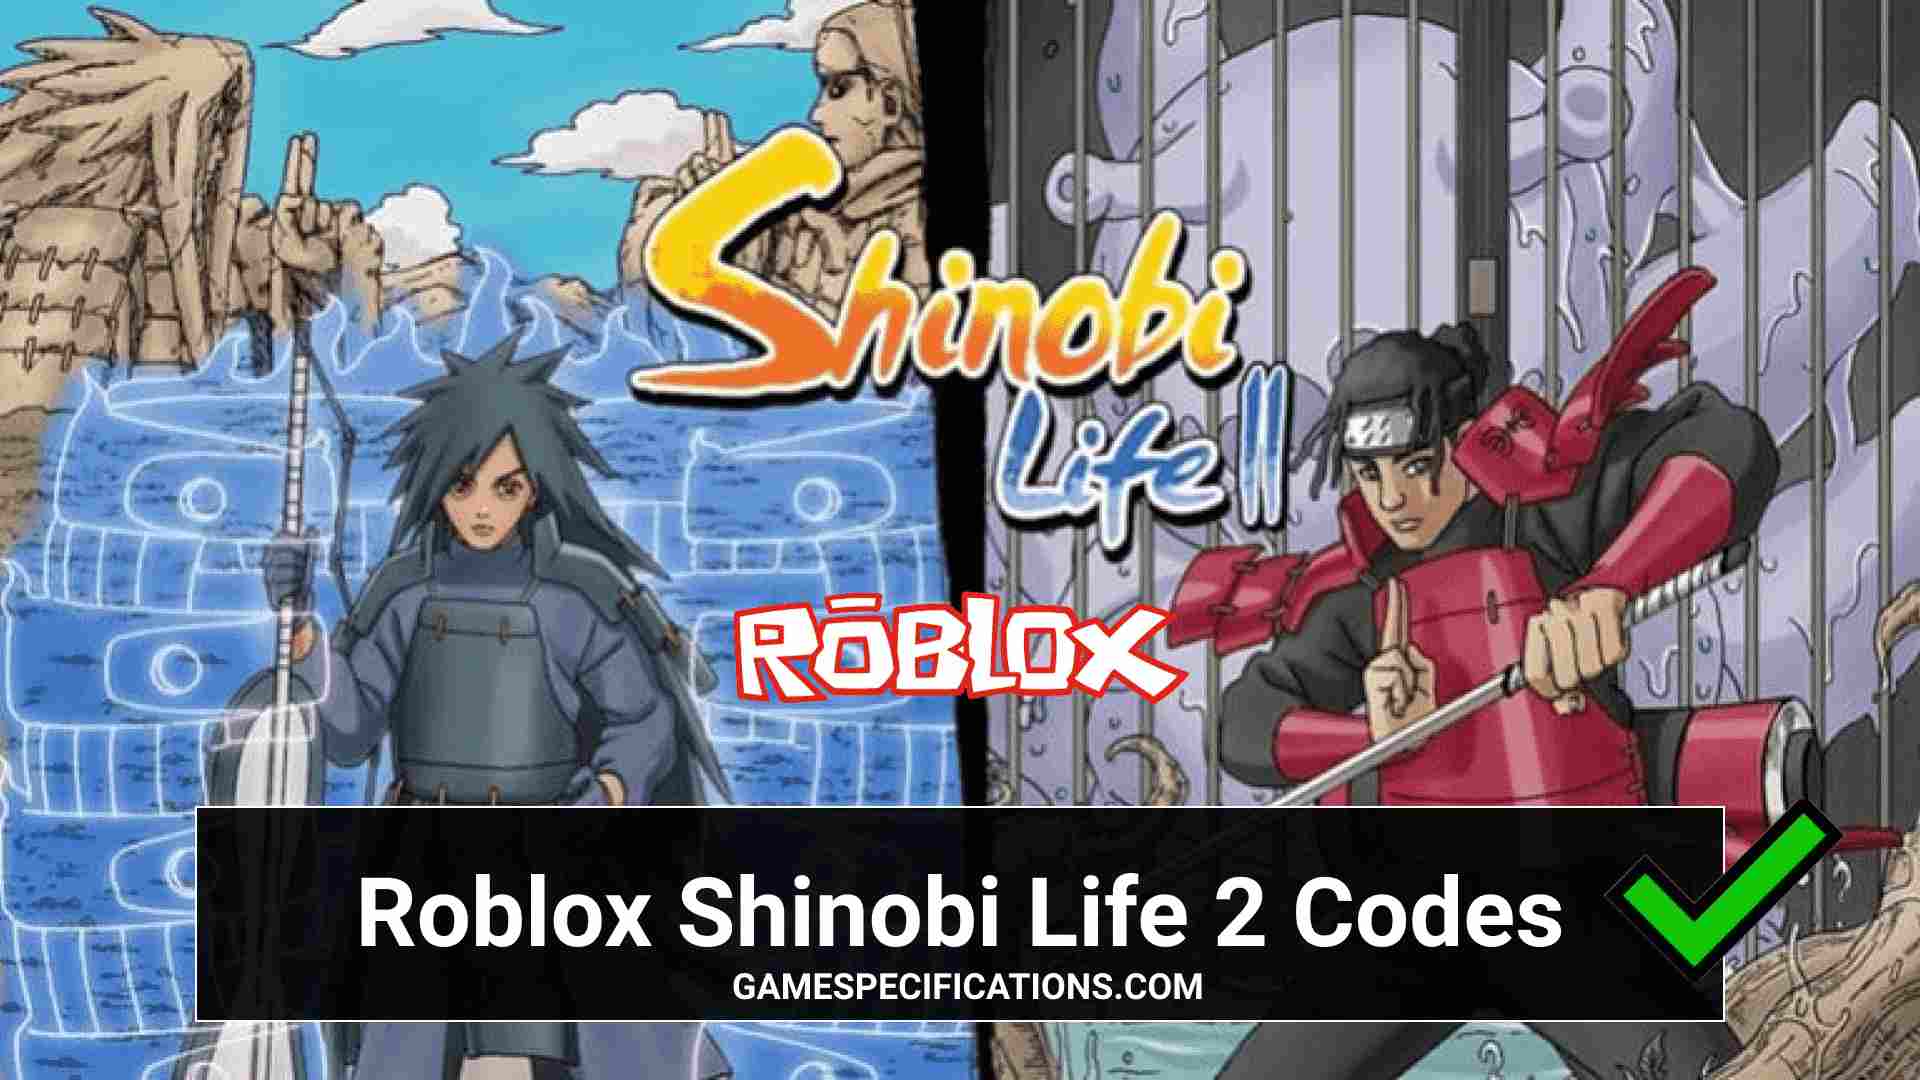 Shinobi life servers. Шиноби лайф. Шиноби лайф 2. Codes Shinobi Life. Roblox Shinobi Life codes.